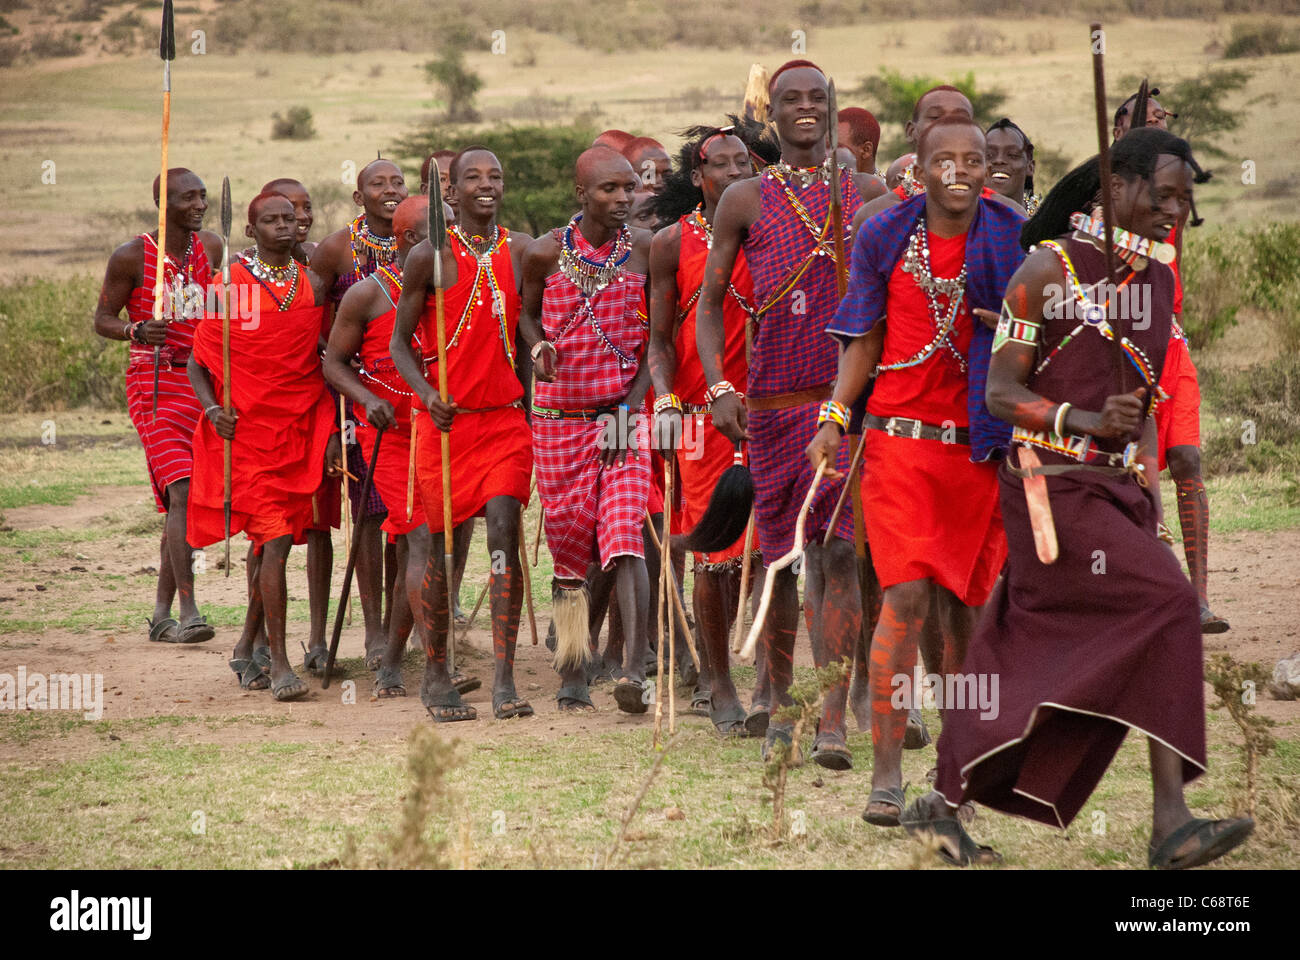 Masai men, doing a welcome dance, wearing traditional dress, in a village in the Masai Mara, Kenya, Africa Stock Photo